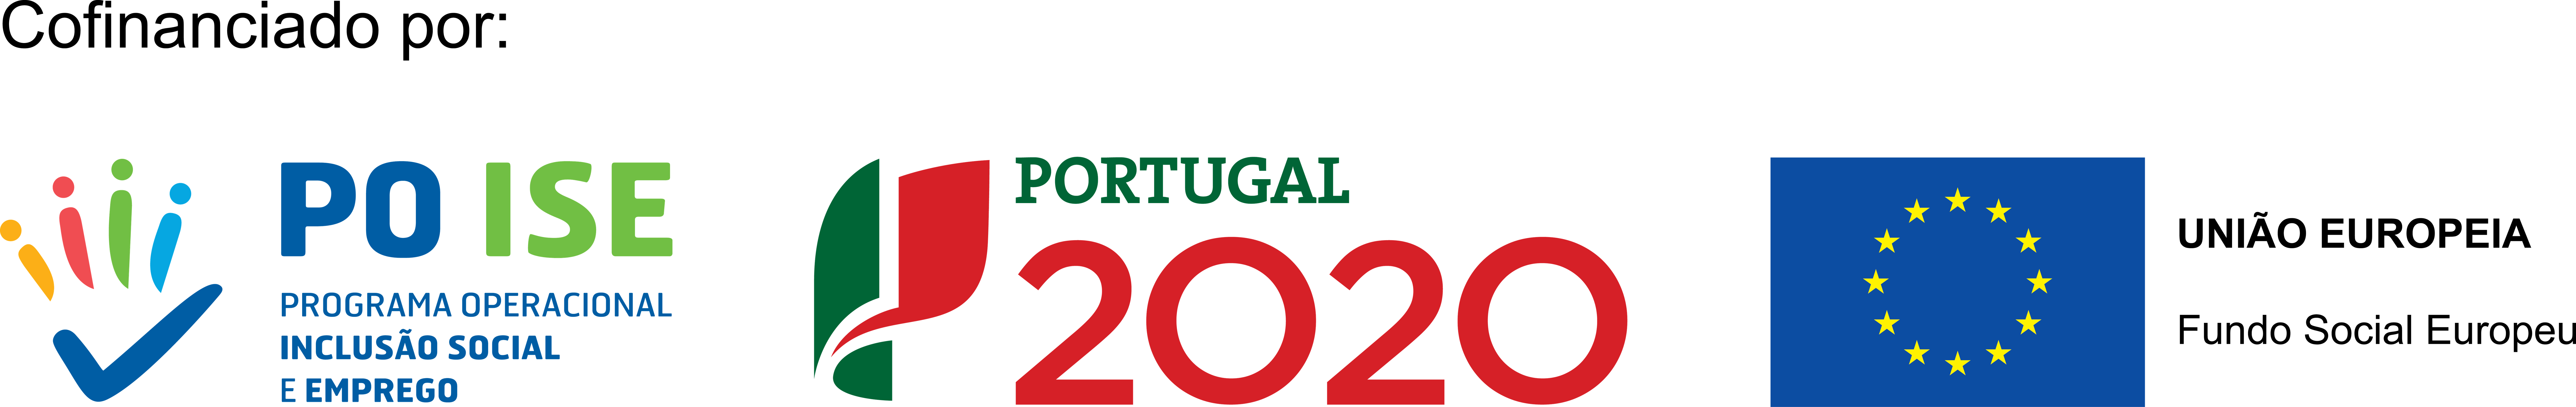 POISESE Portugal2020